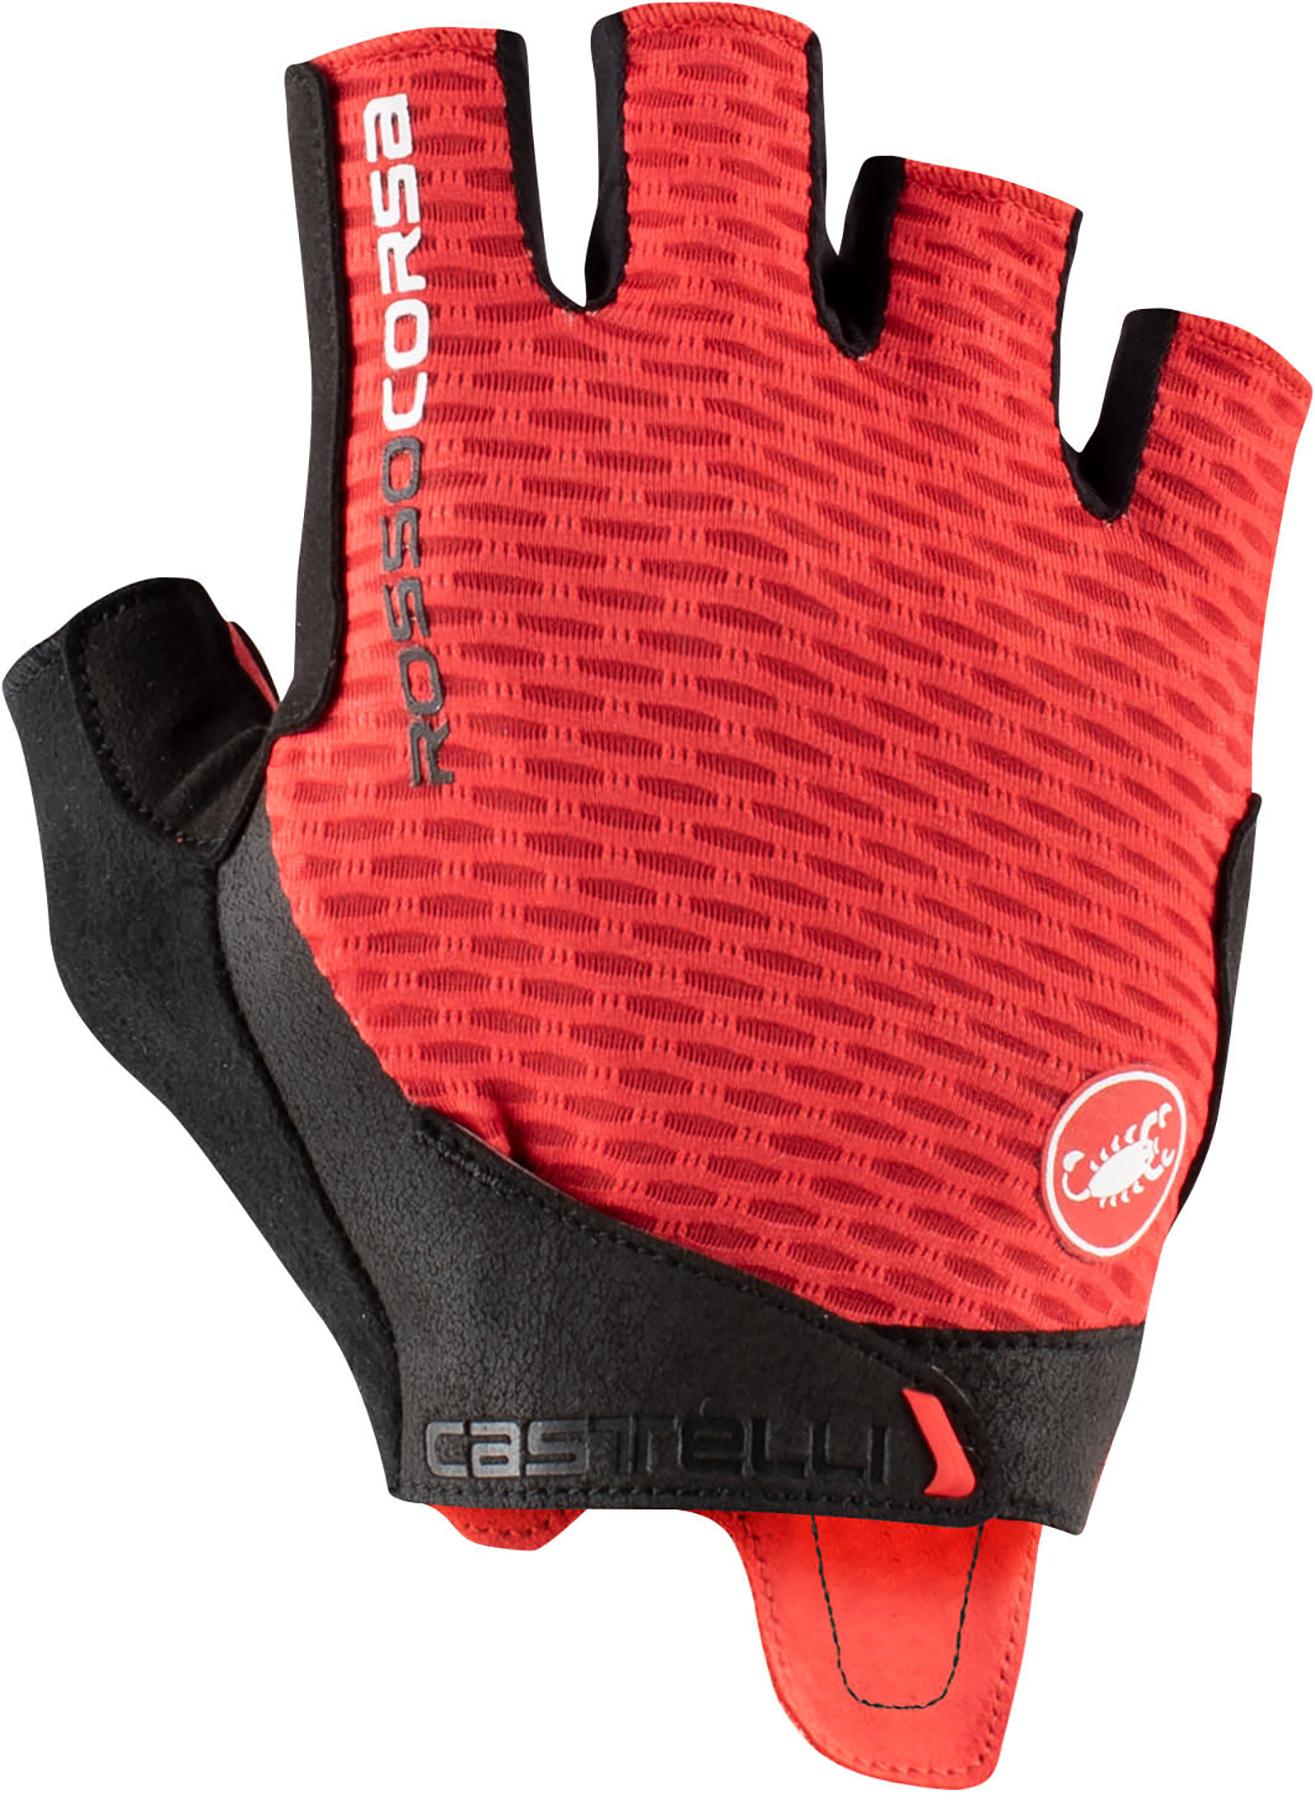 Castelli Rosso Corsa Pro V Gloves  Red